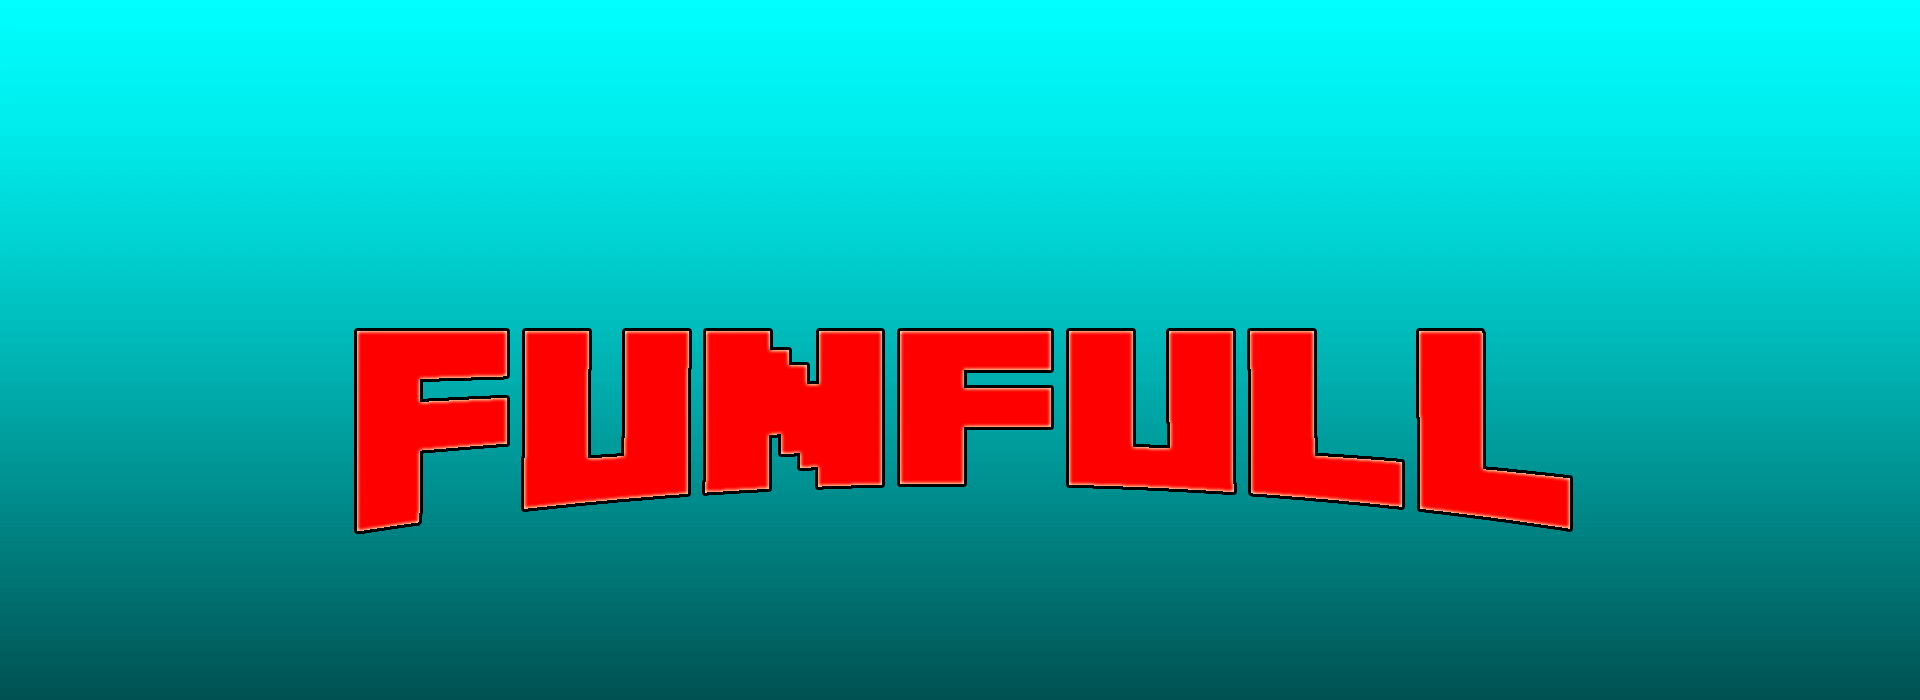 FunFull скриншот 1